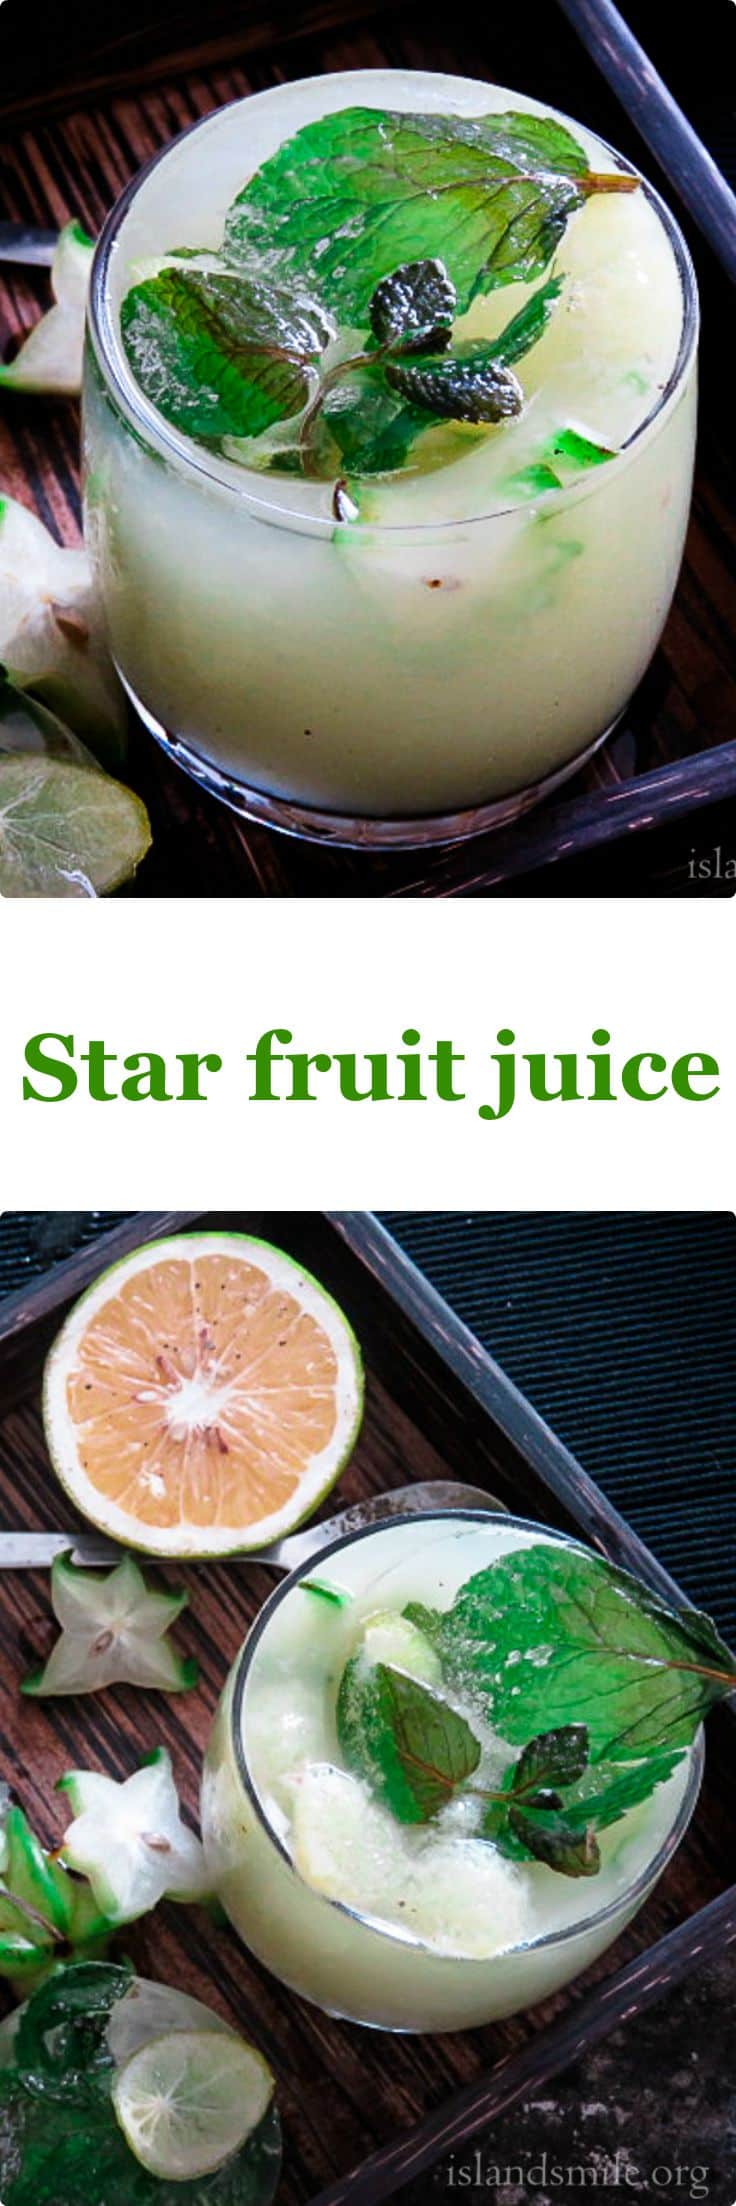 starfruit juice. find recipe on www.islandsmile.org